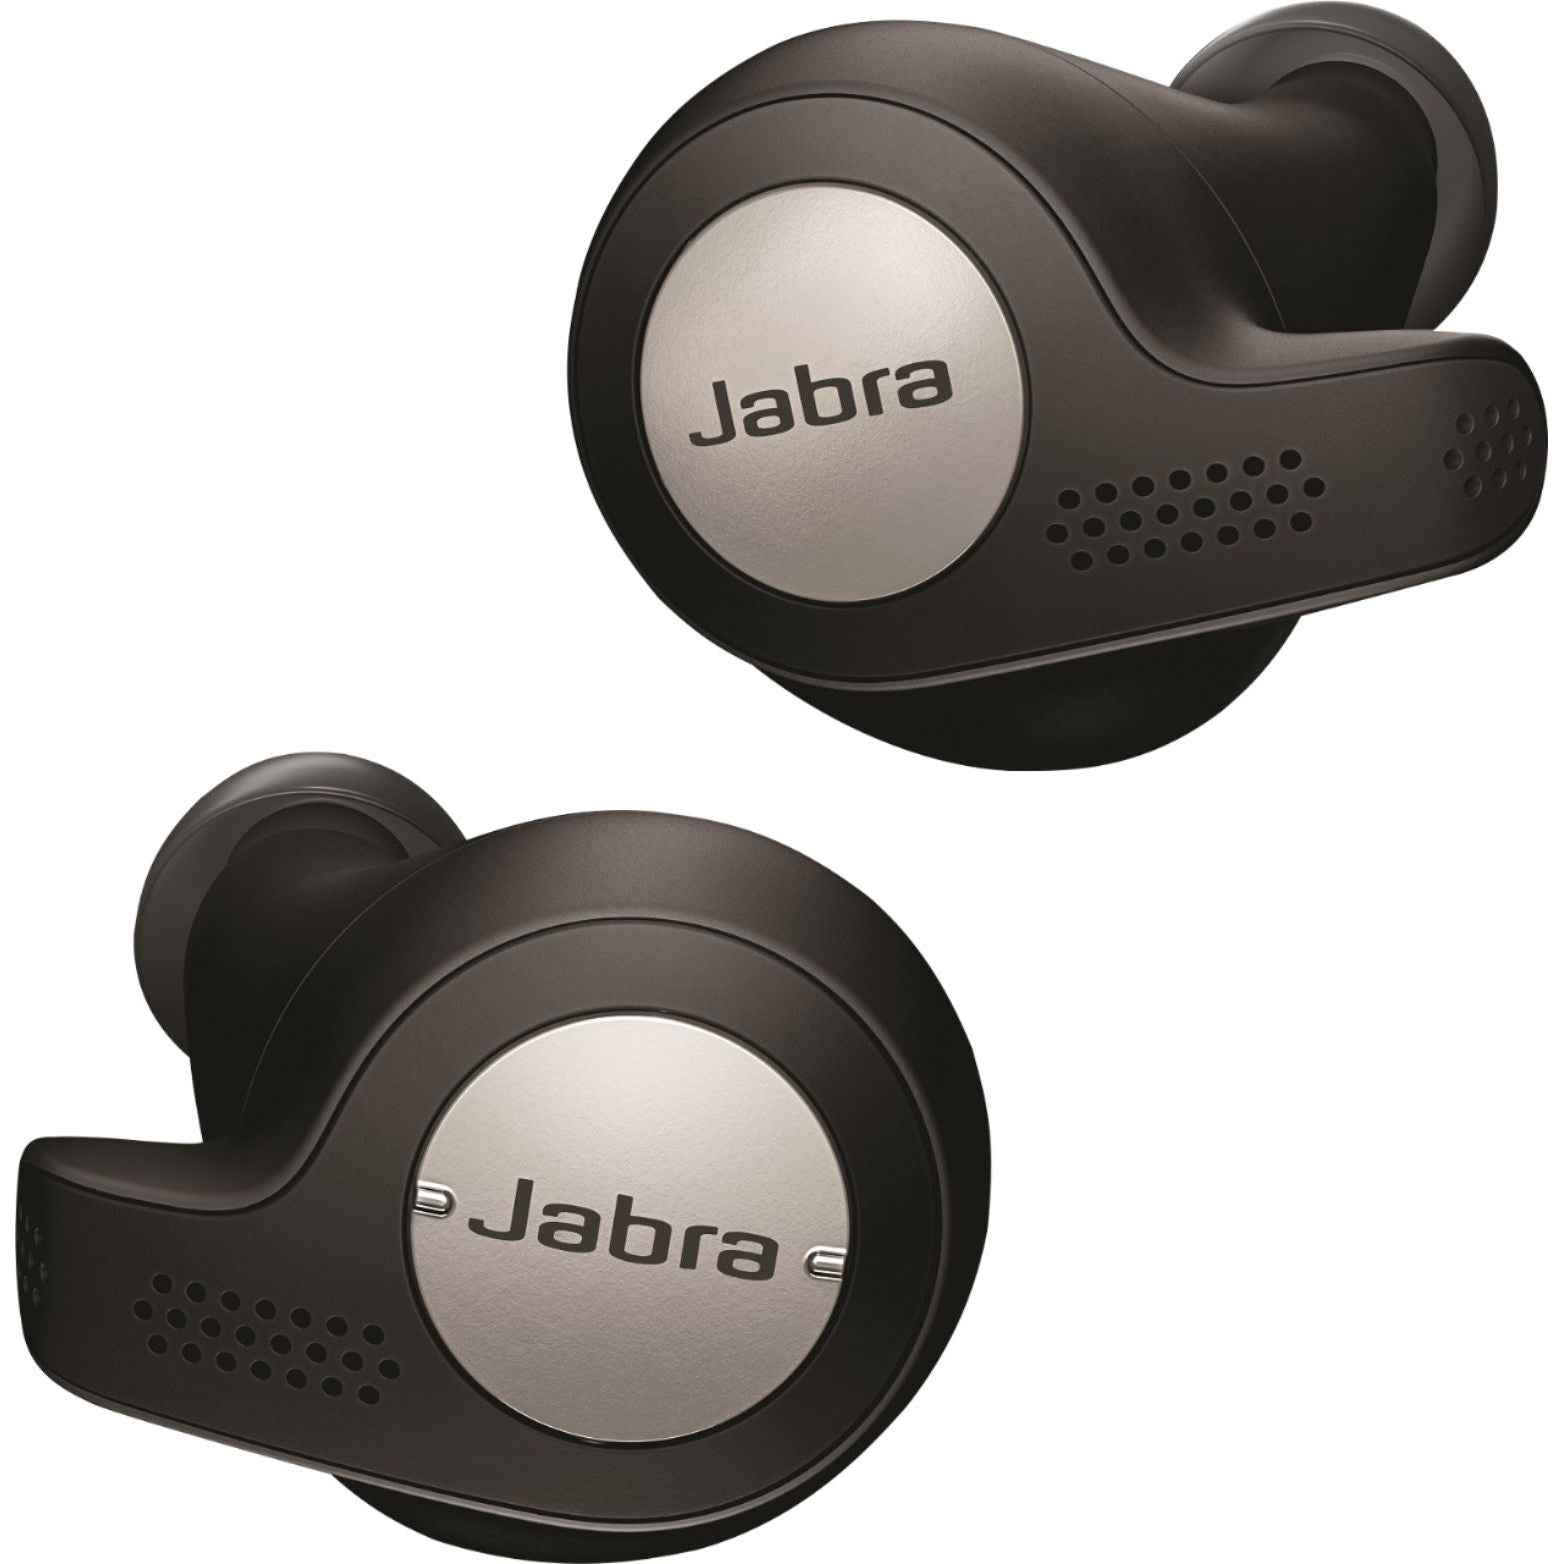 Jabra - 9100-99010002-14 Elite Active 65t True Wireless Earbud Headphones - Titanium Black